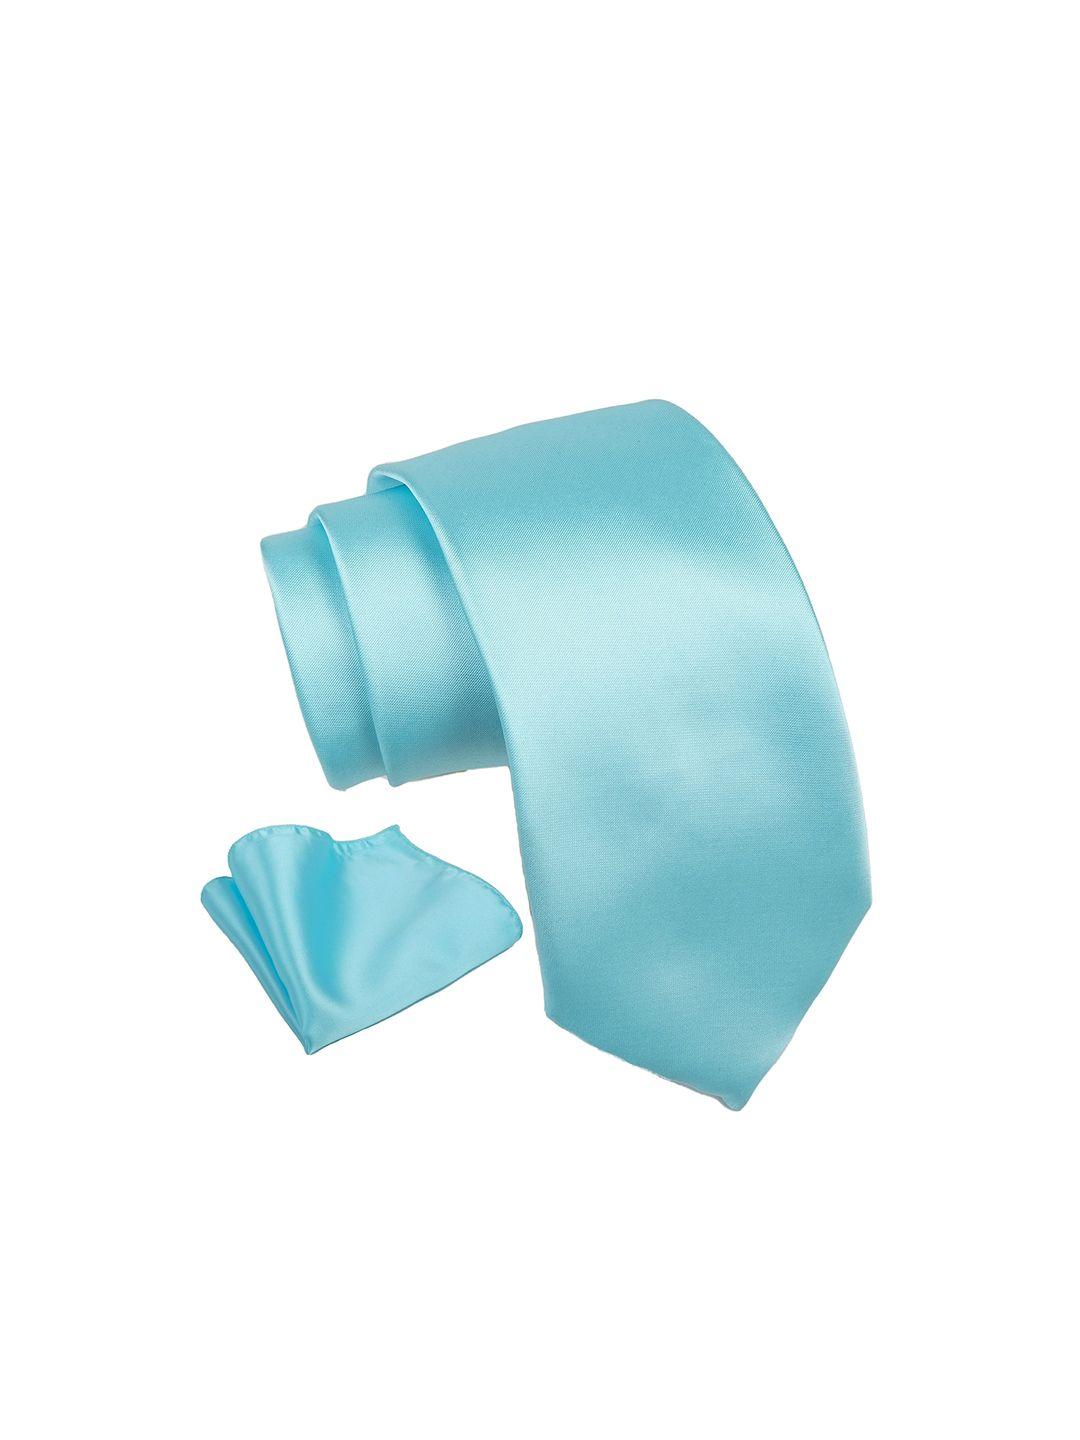 axlon tie & pocket square accessory gift set